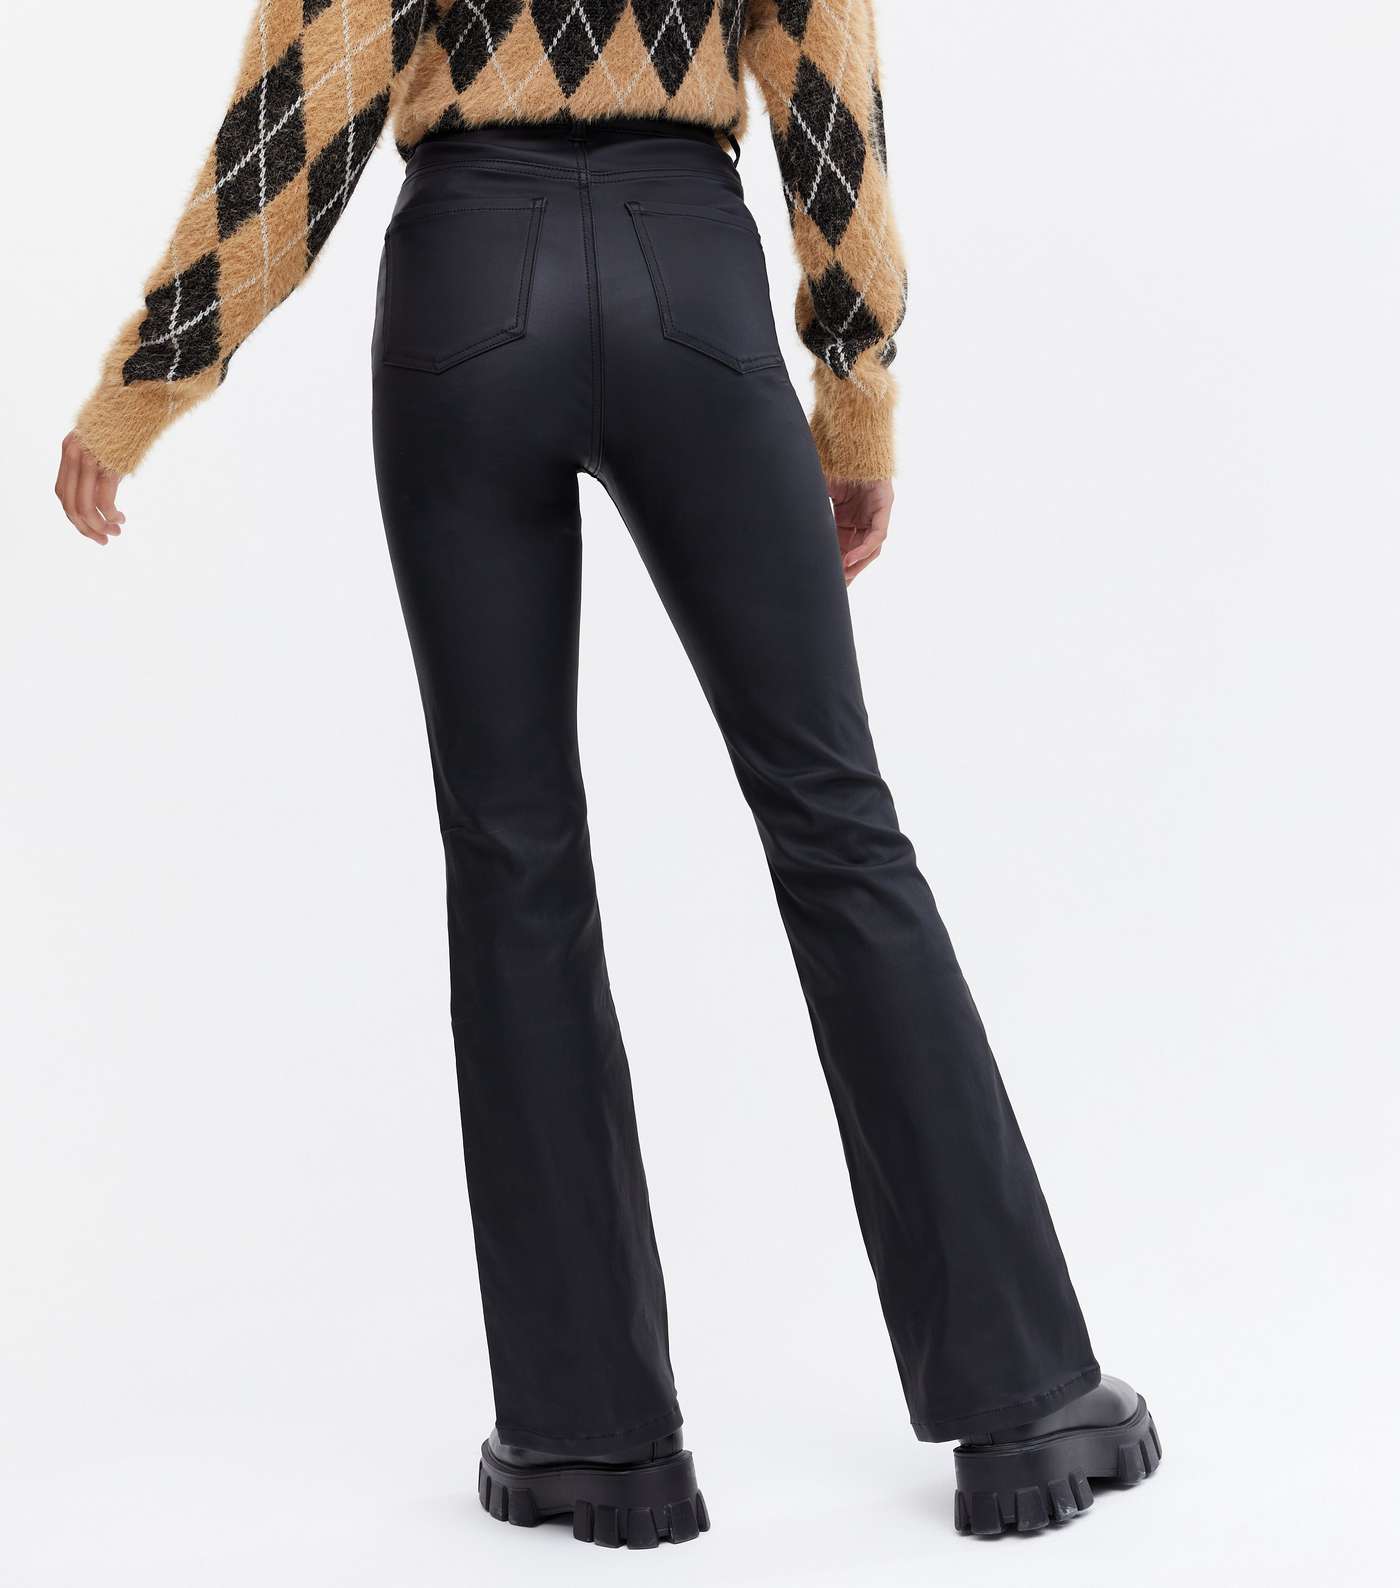 Black Leather-Look High Waist Flared Brooke Jeans Image 4